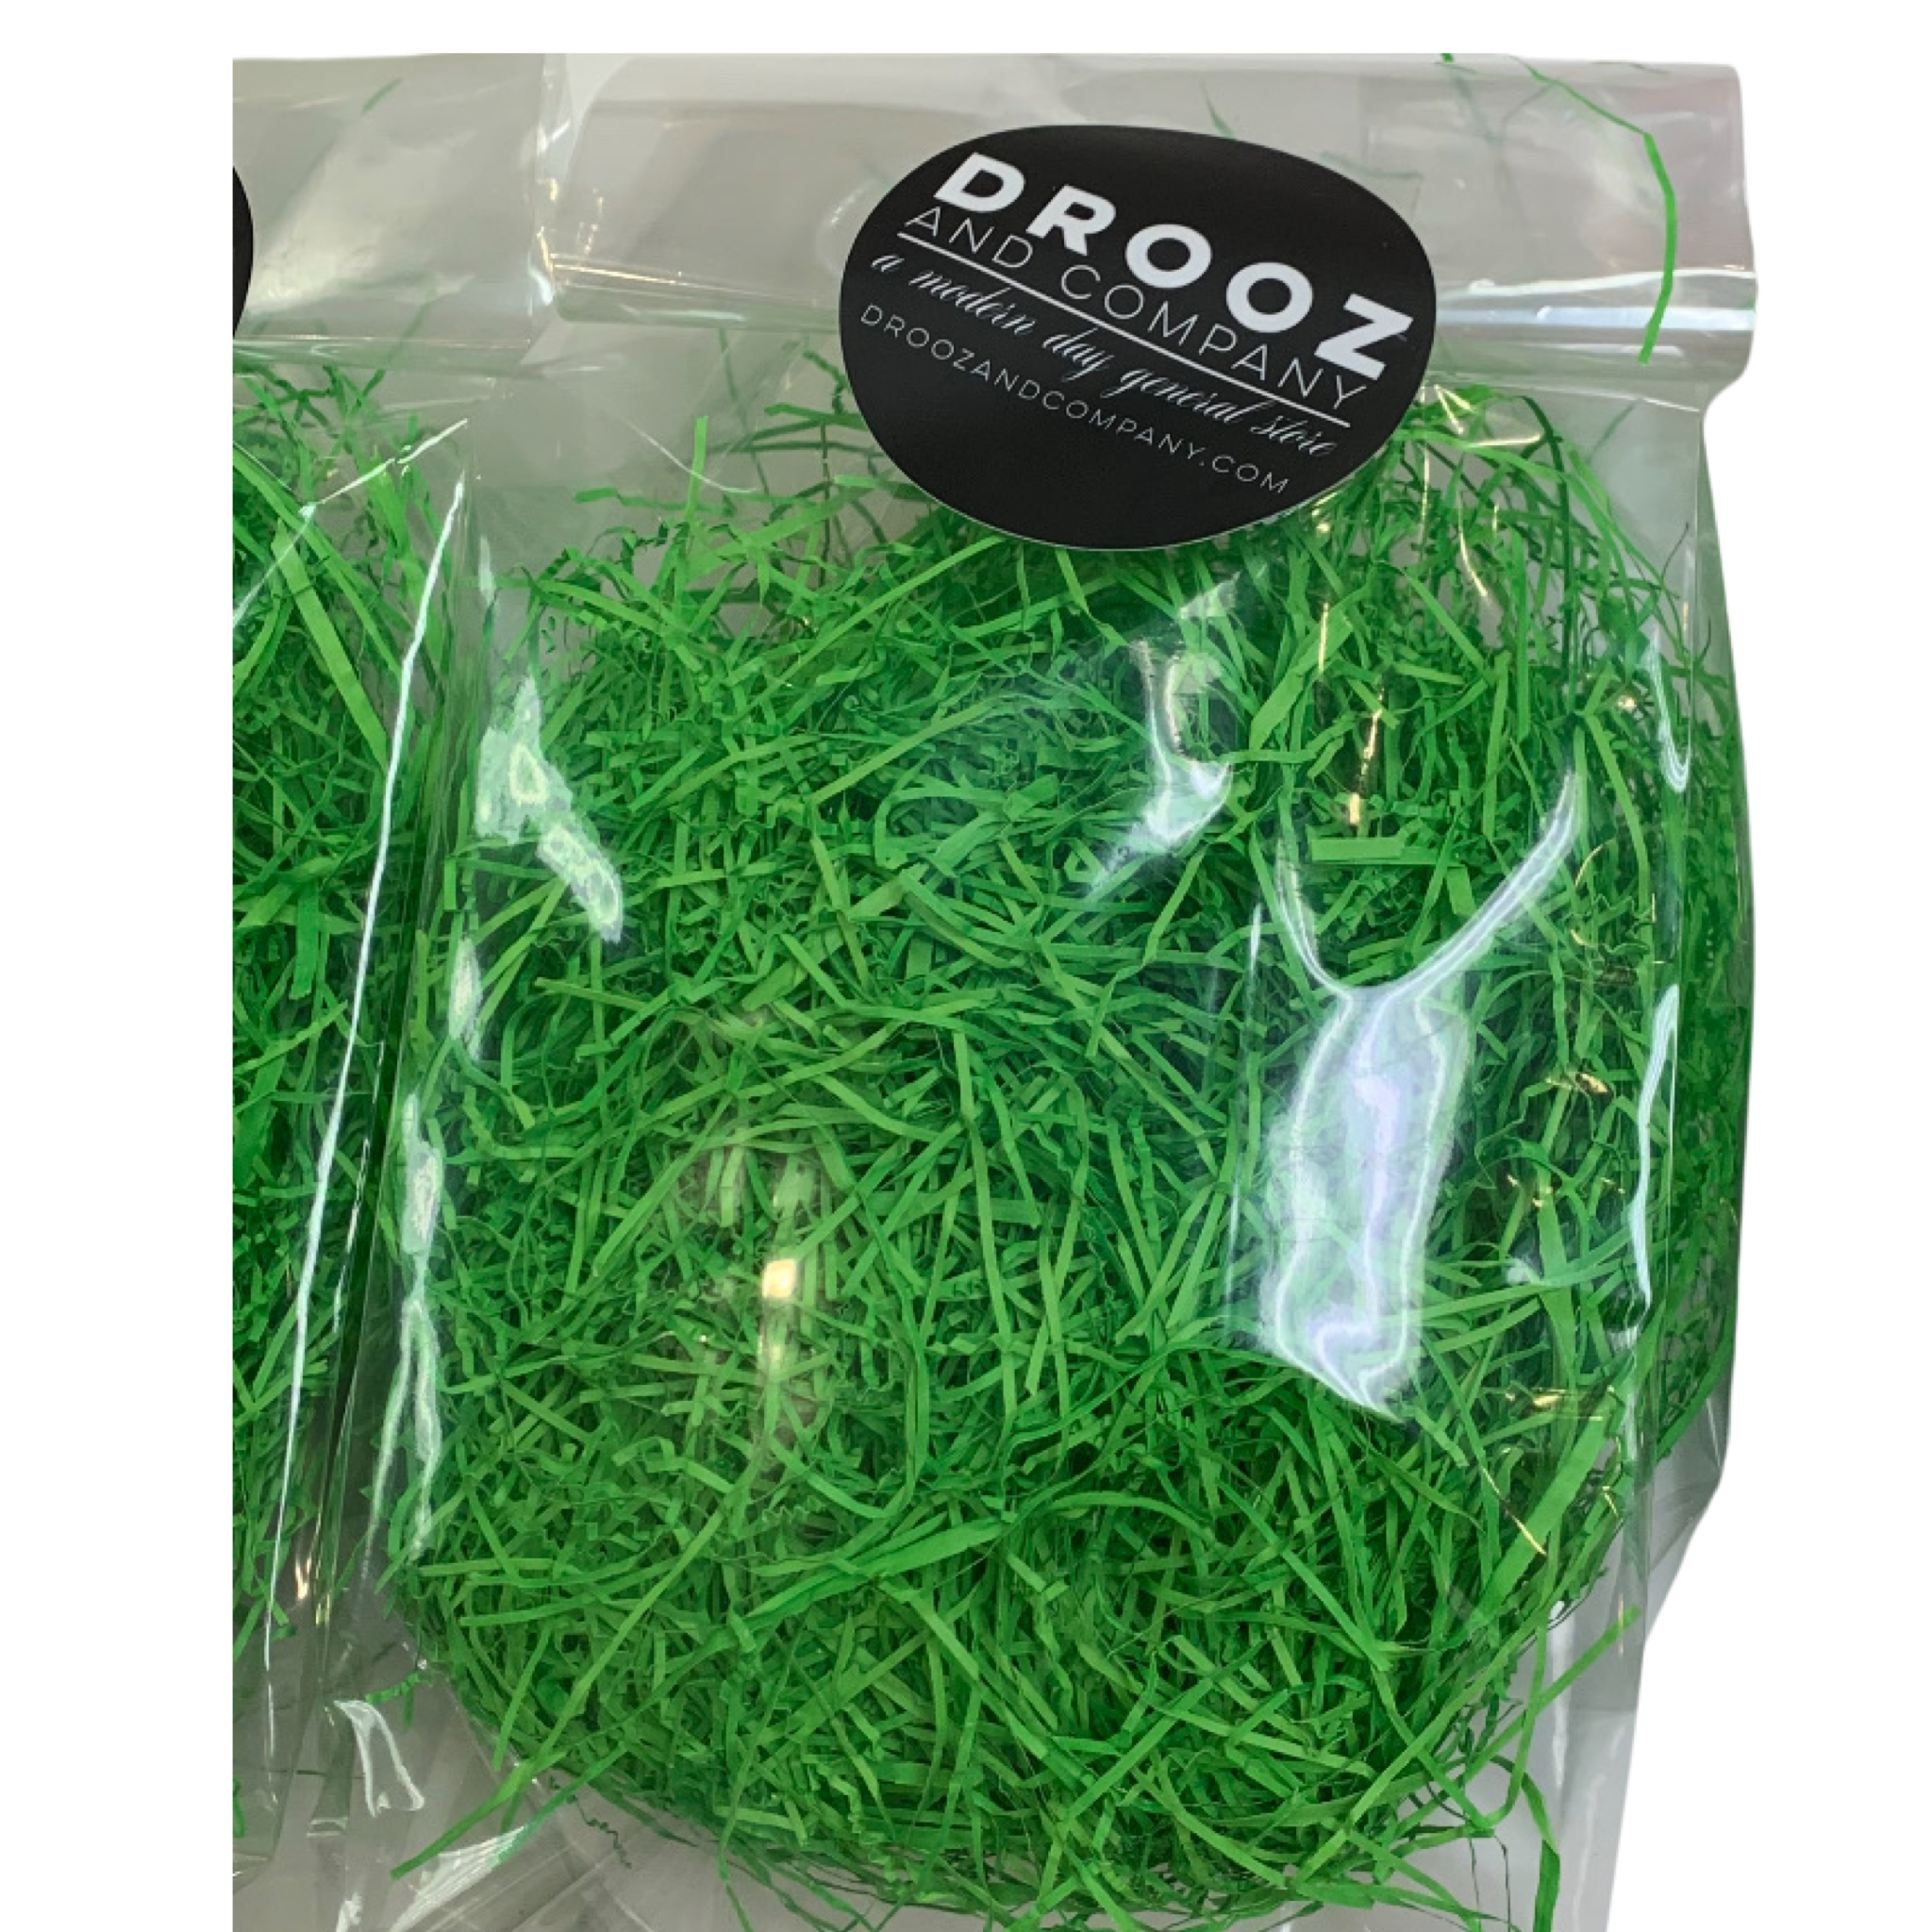 Easter green grass shred